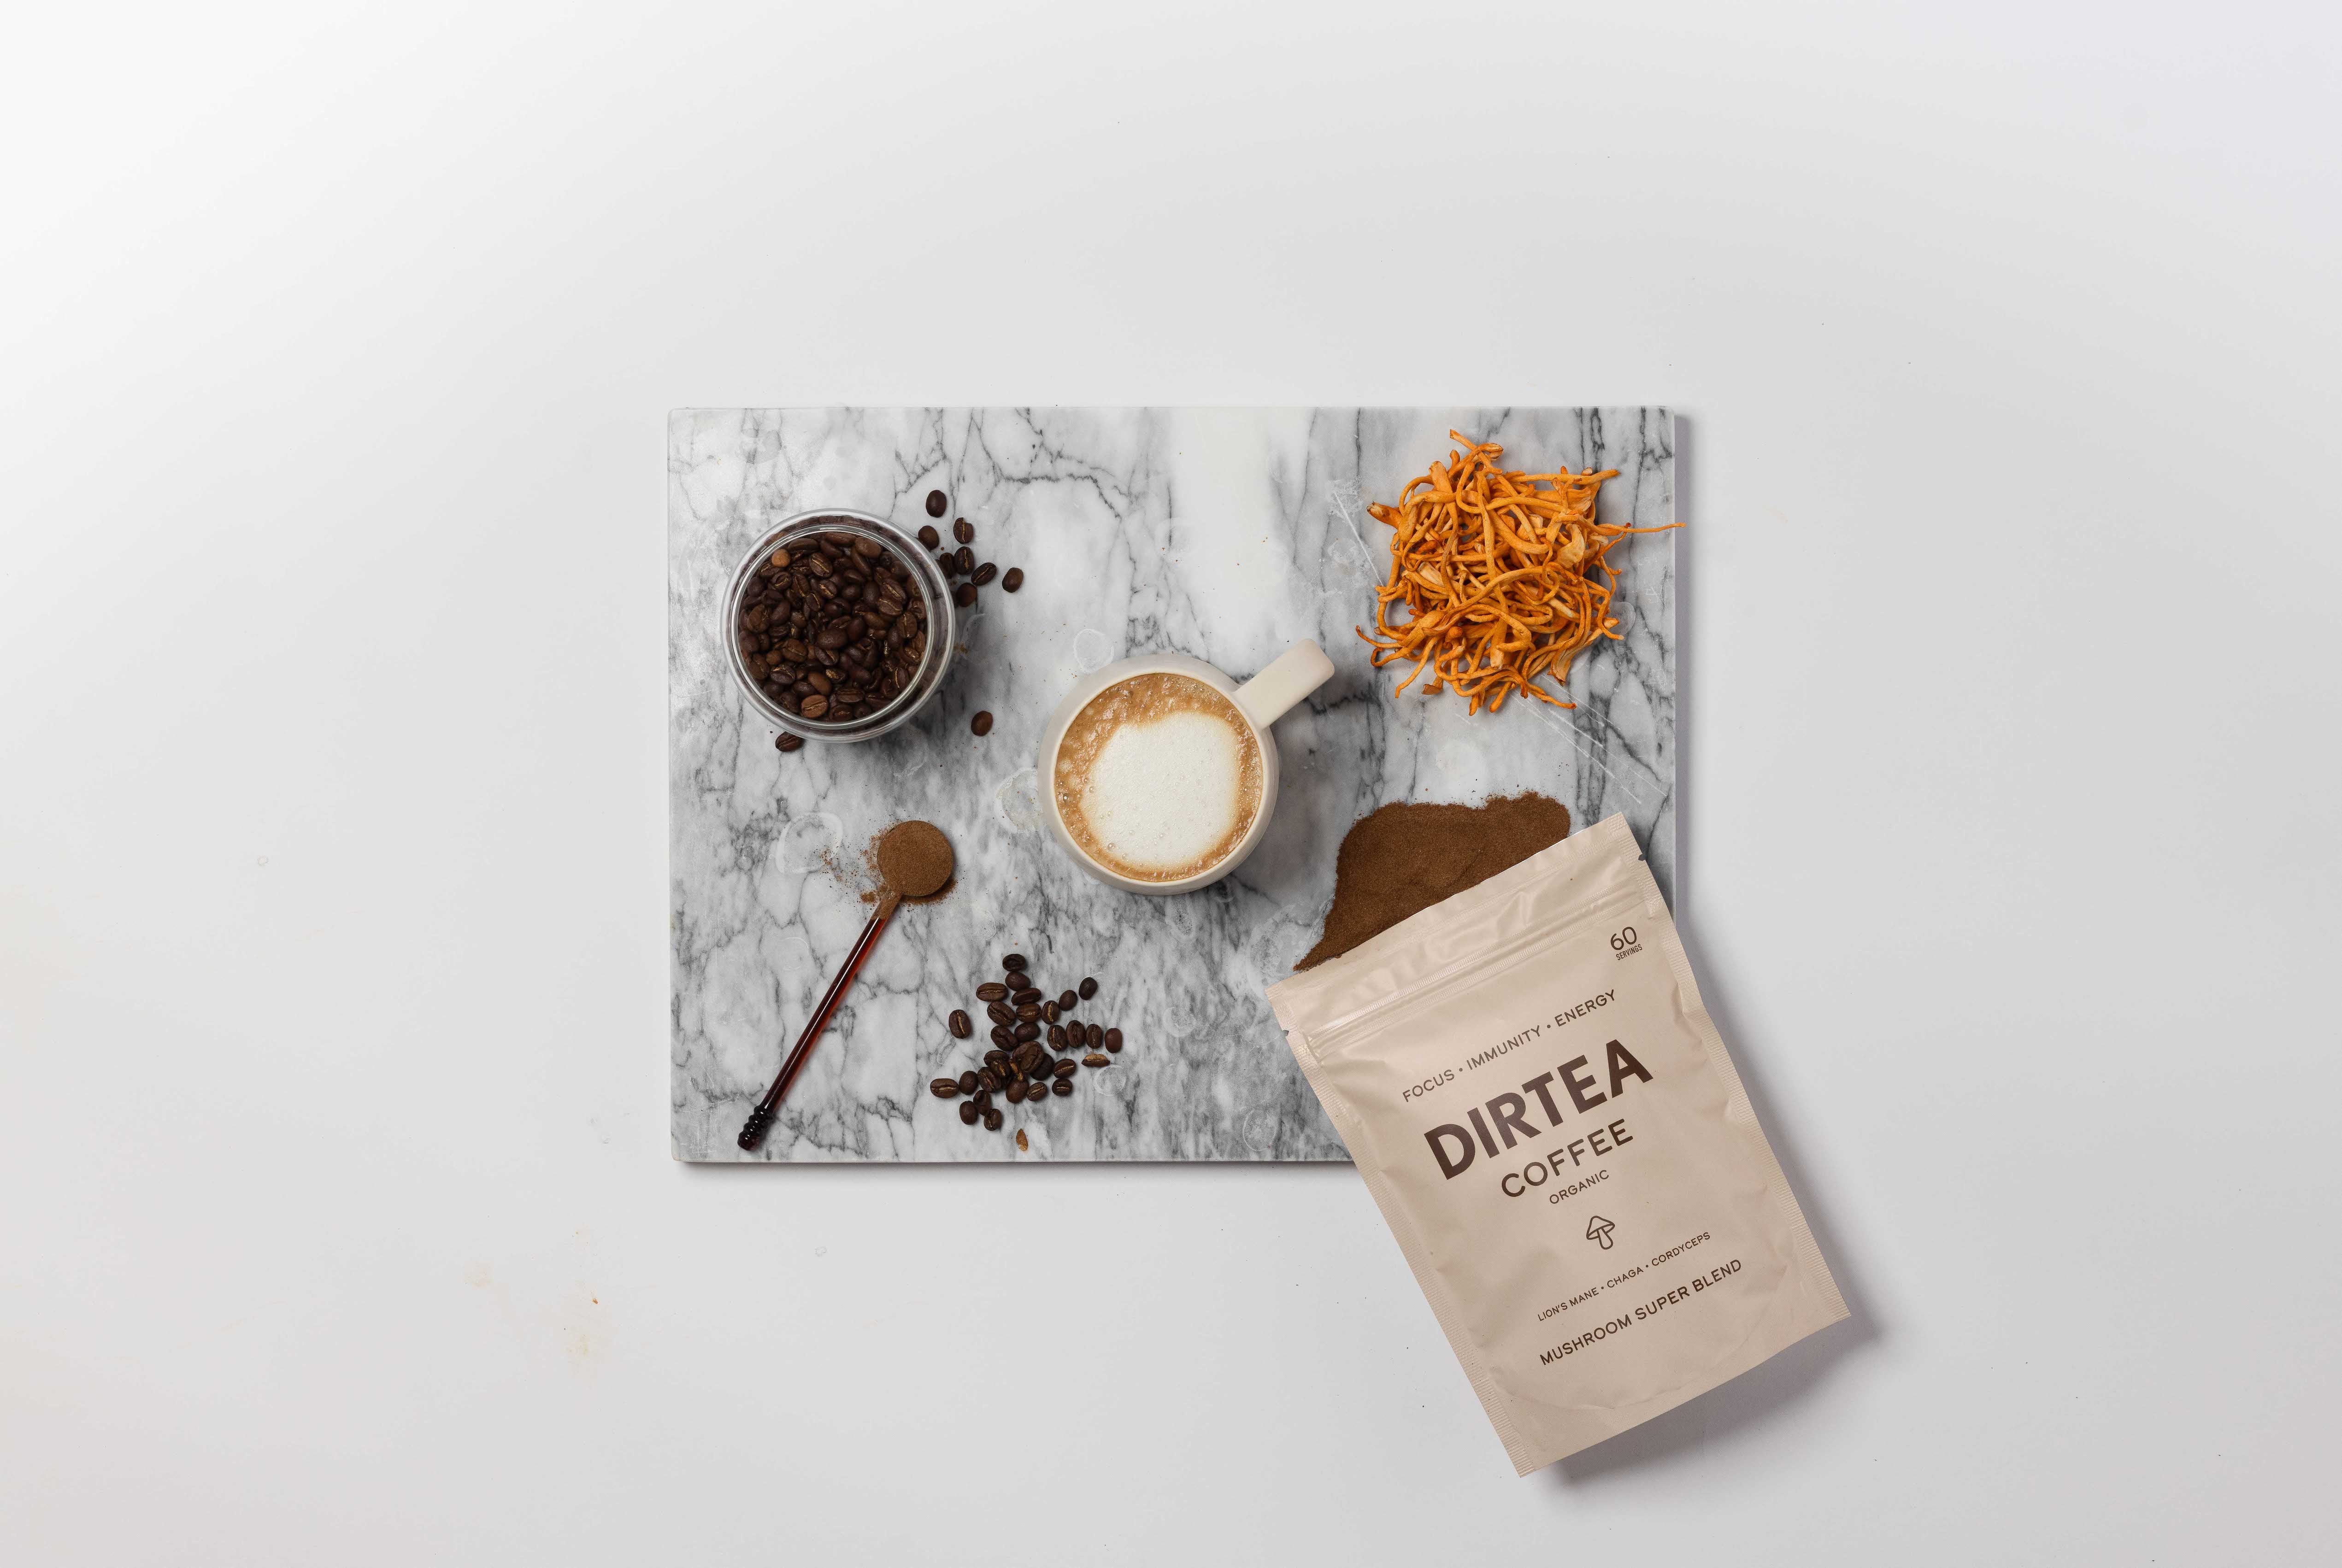 DIRTEA Coffee Mushroom Powder